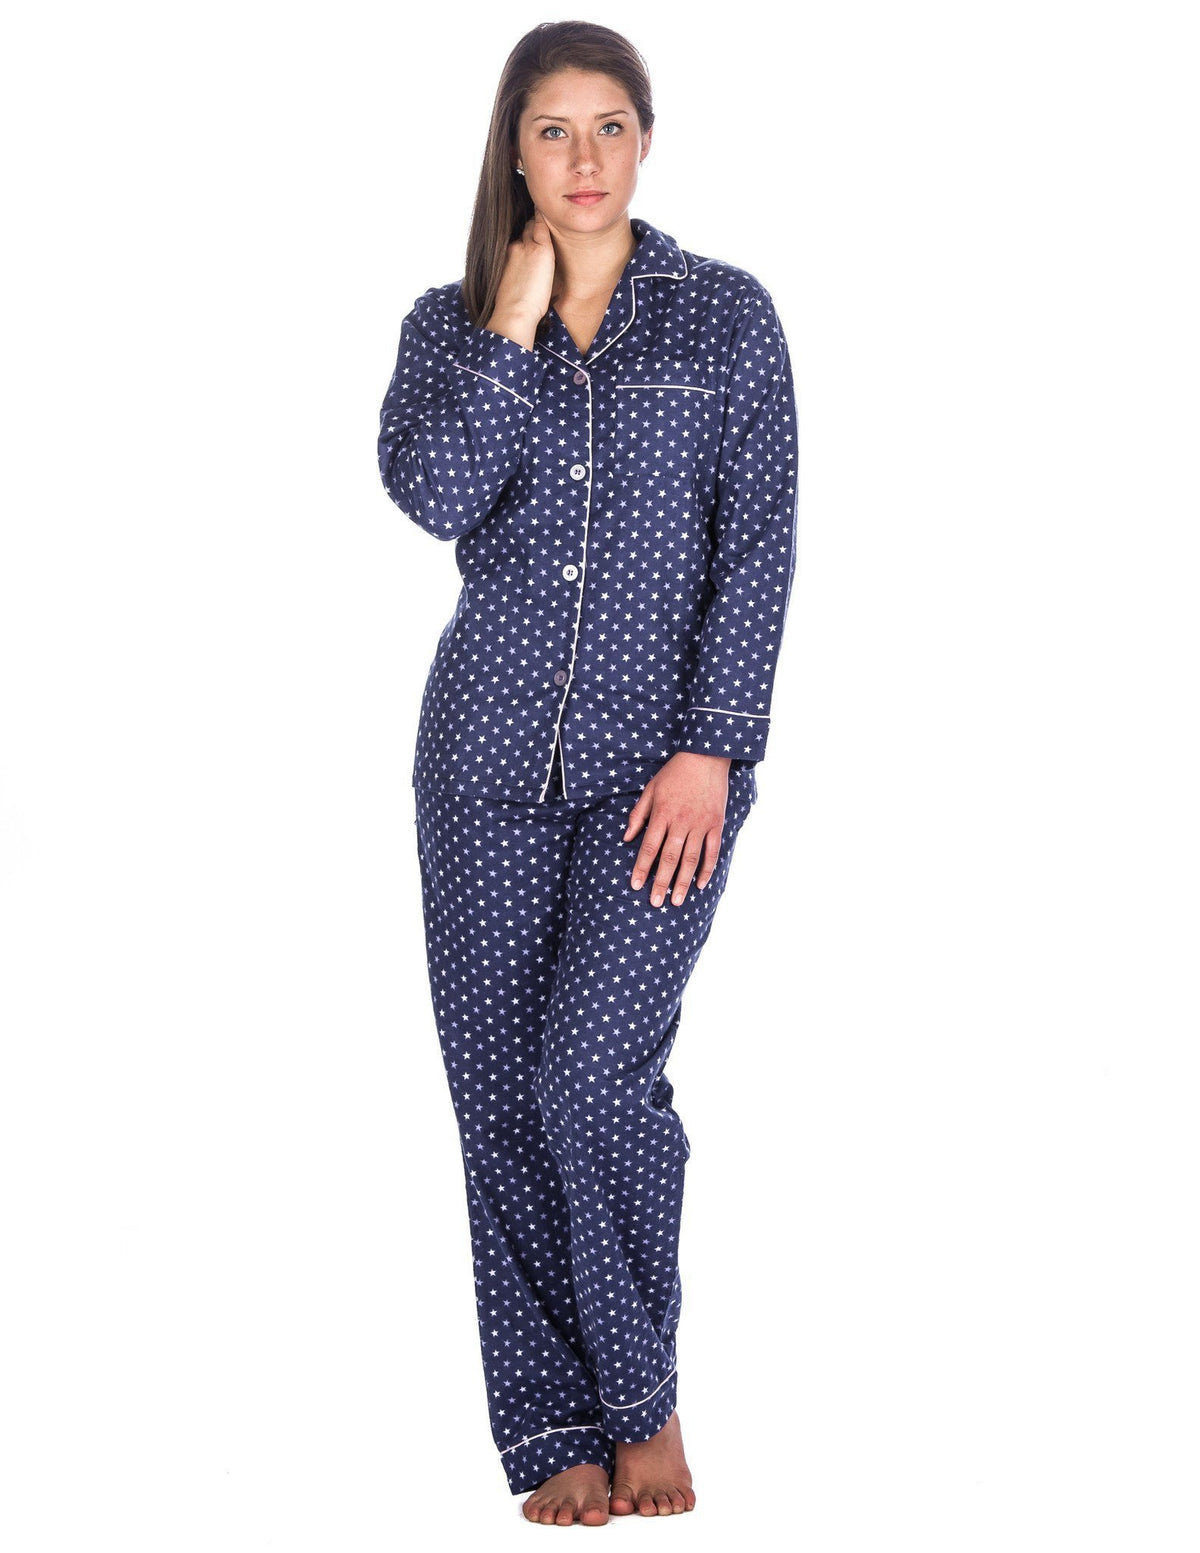 Realxed Fit Womens 100% Cotton Flannel Pajama Sleepwear Set - Stars Blue